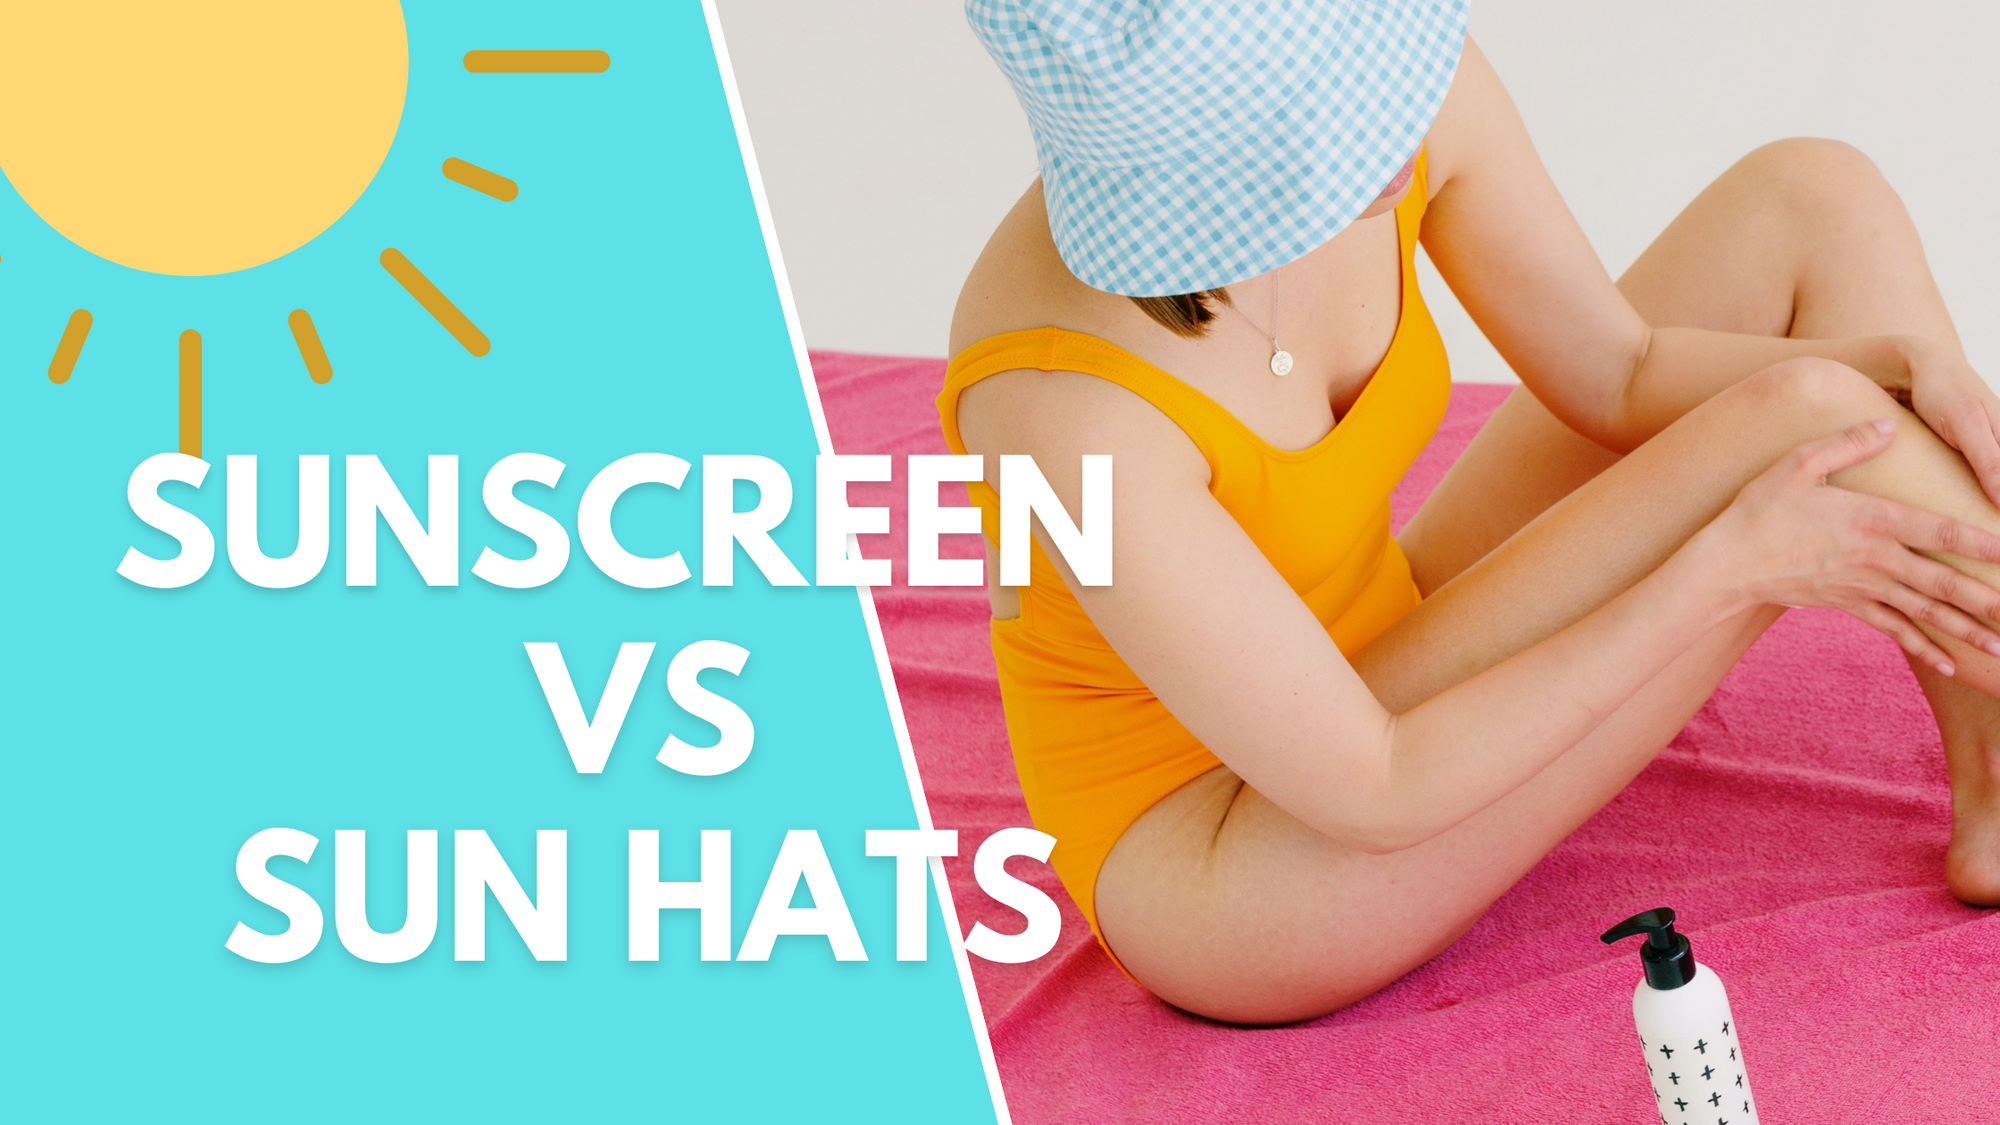 Sunscreen vs Sun protection hat